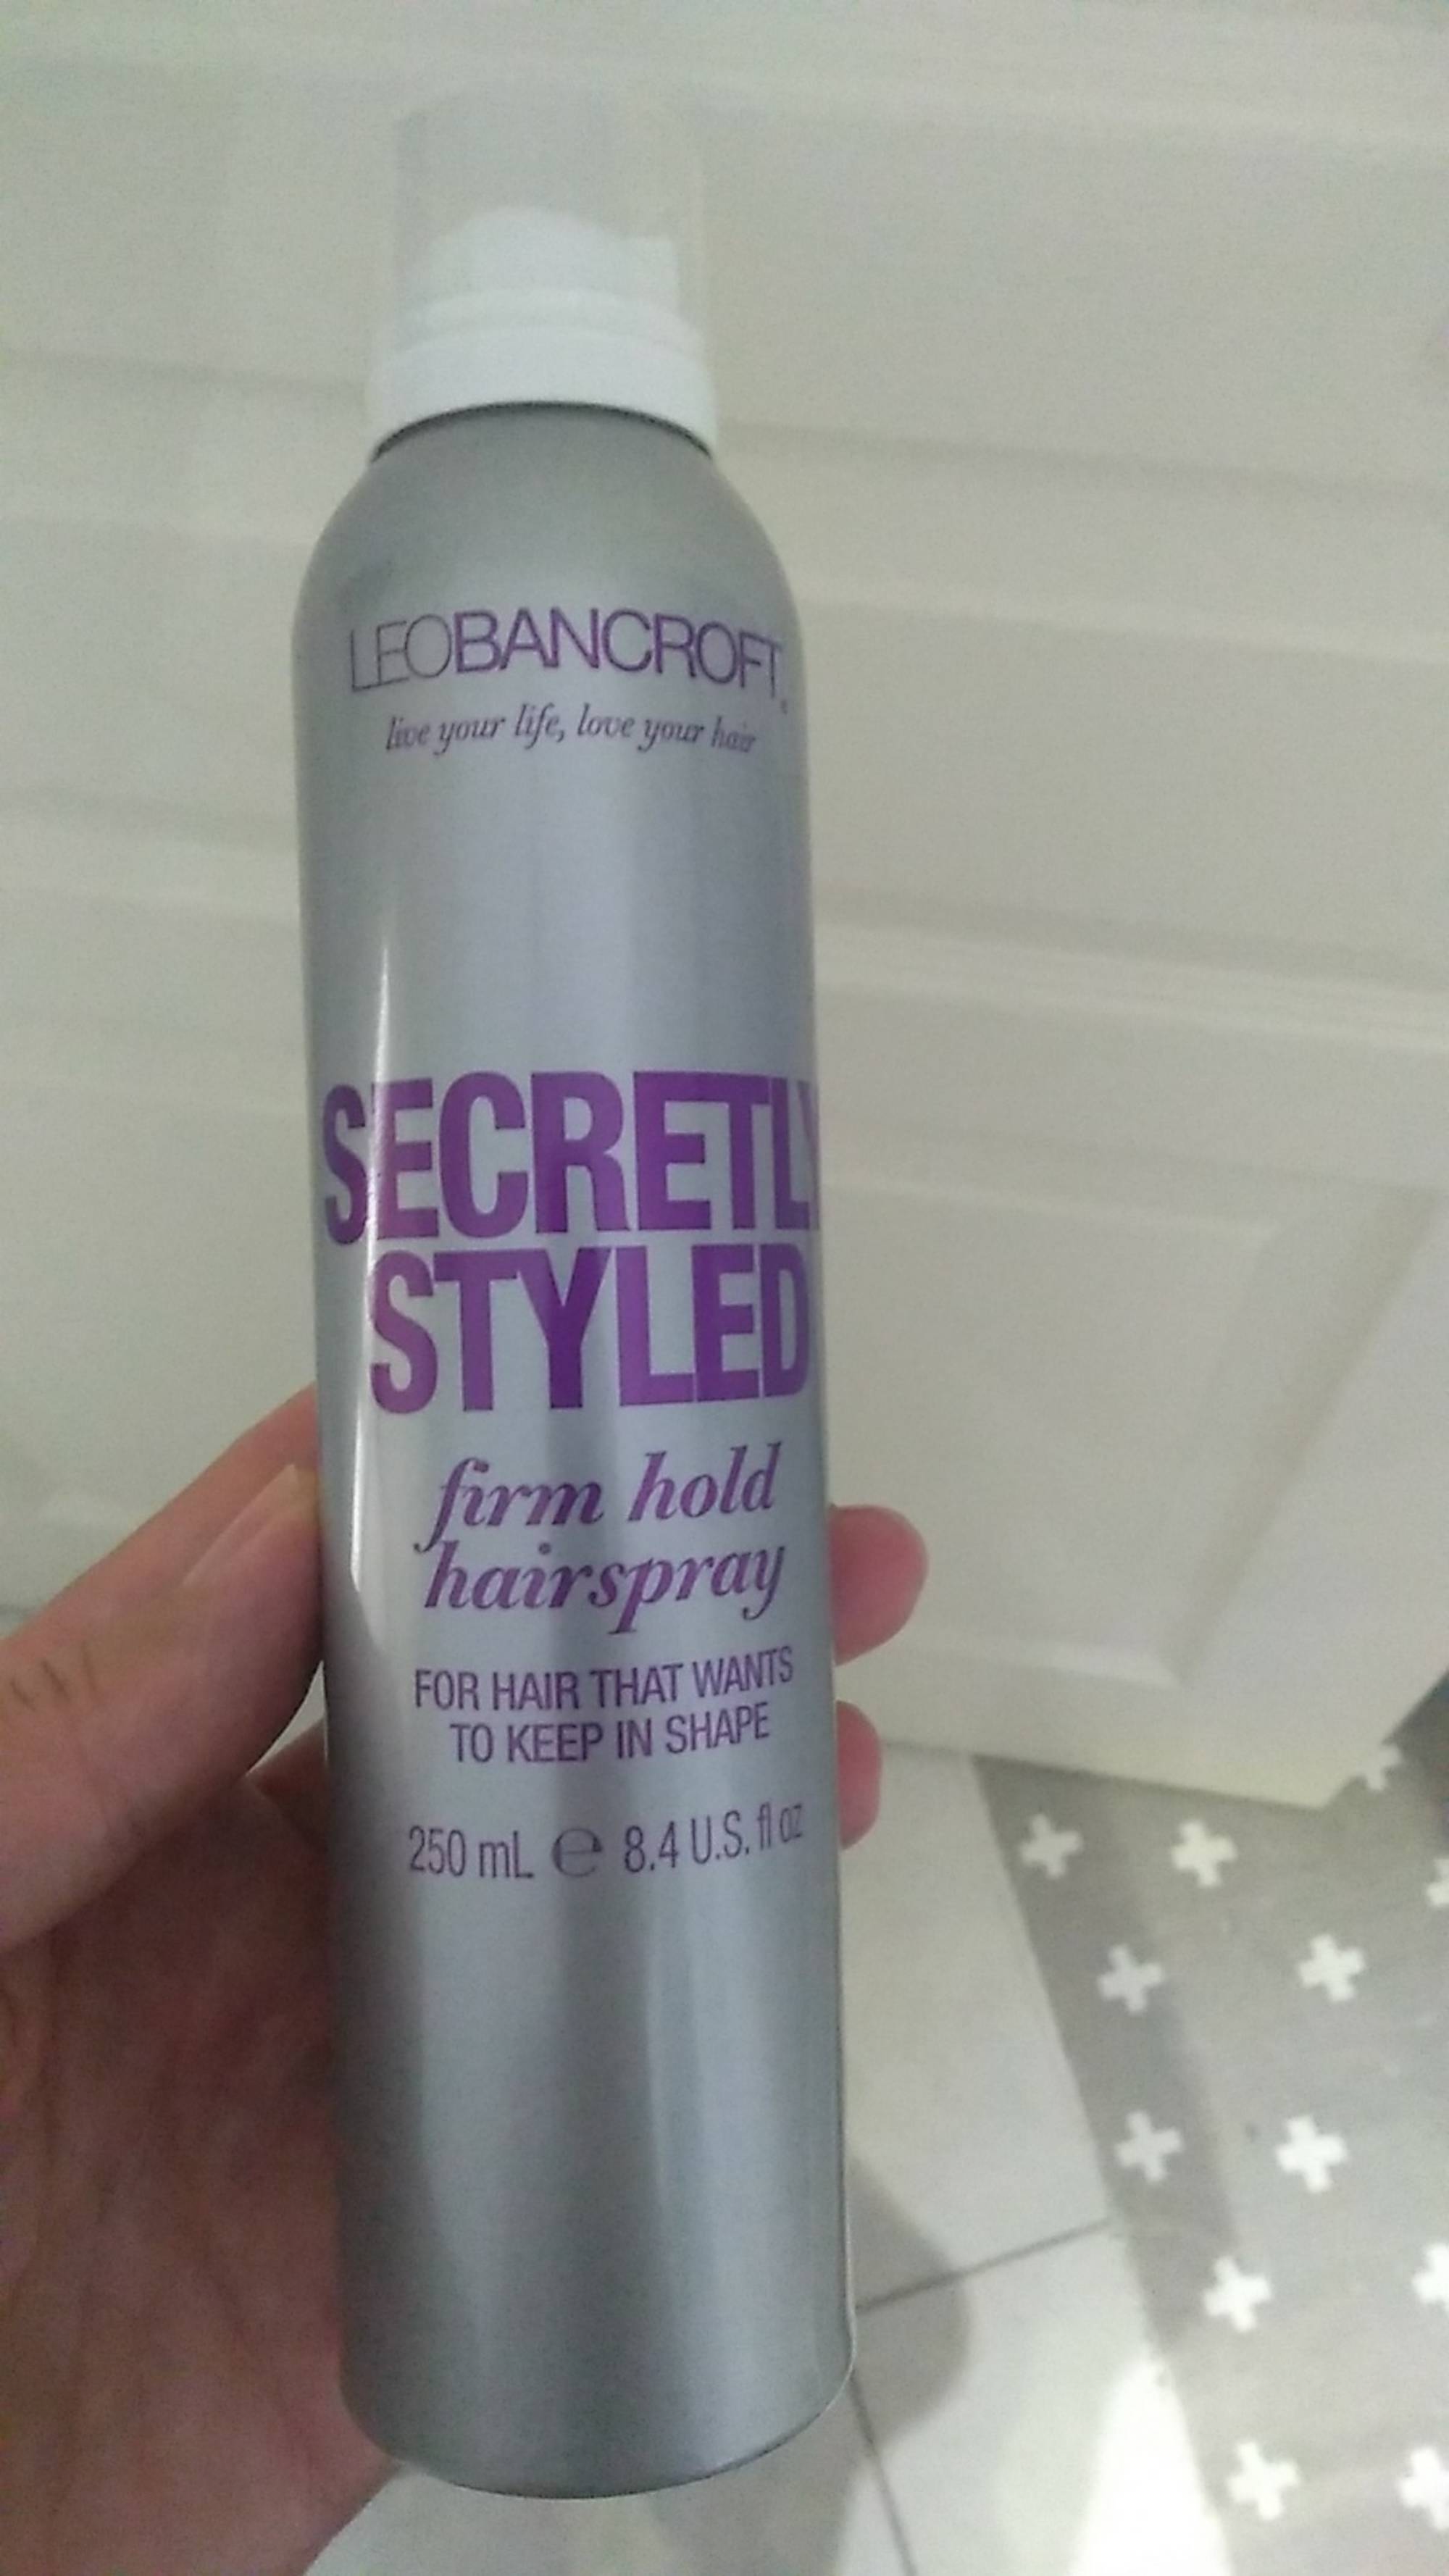 LEO BANCROFT - Secretly styled - Firm hold hairspray